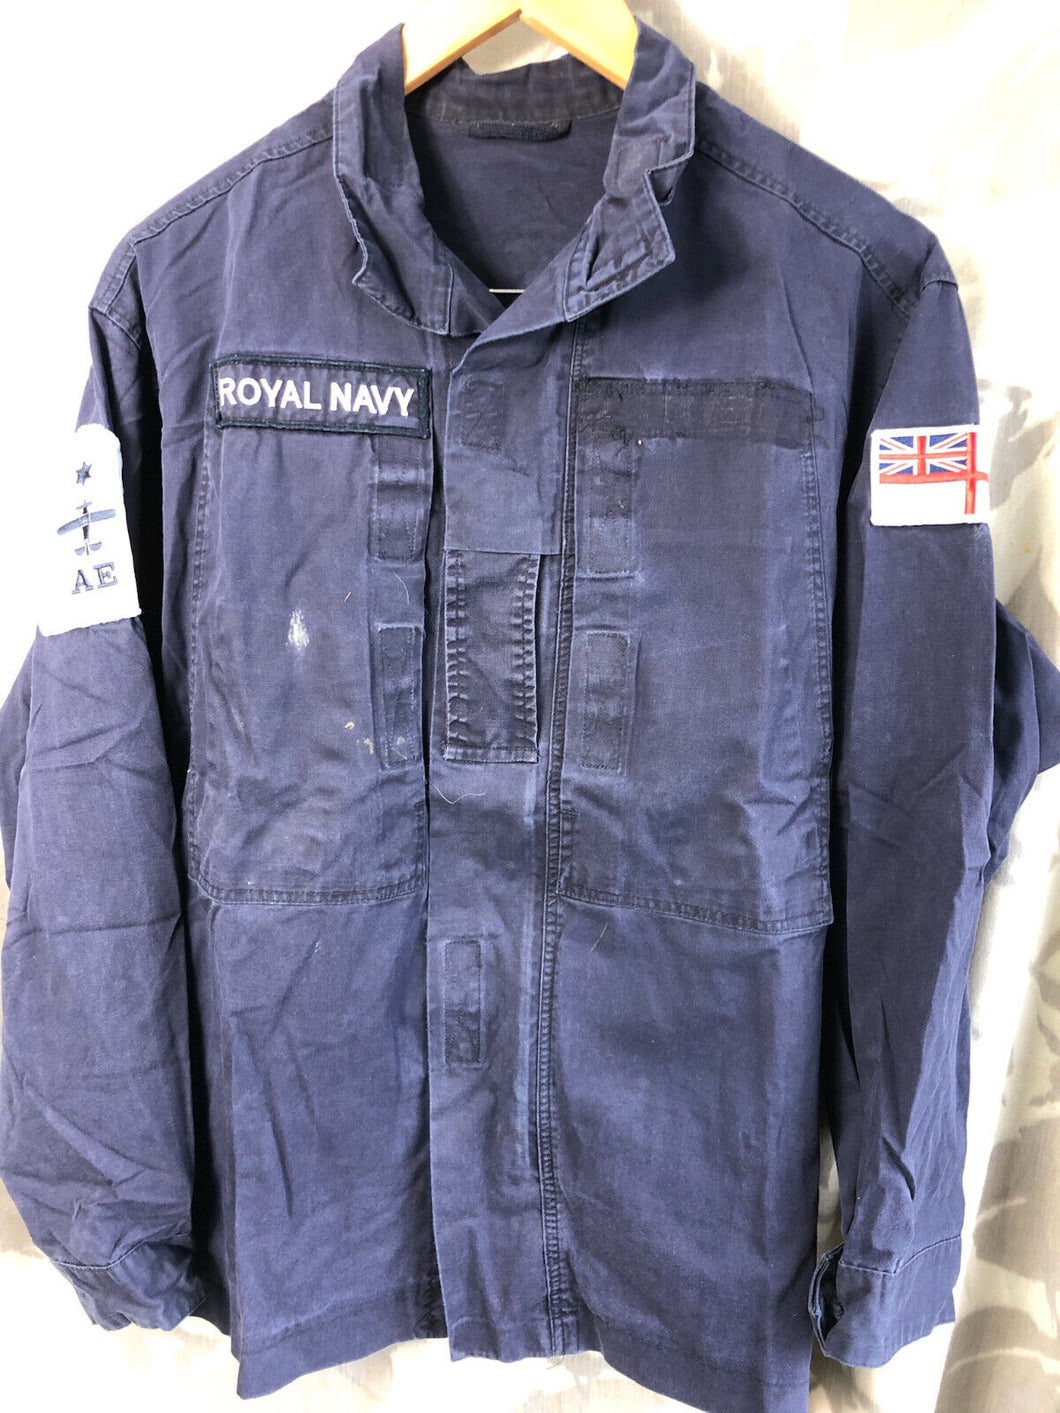 Genuine British Royal Navy Warm Weather Combat Jacket - 170/88